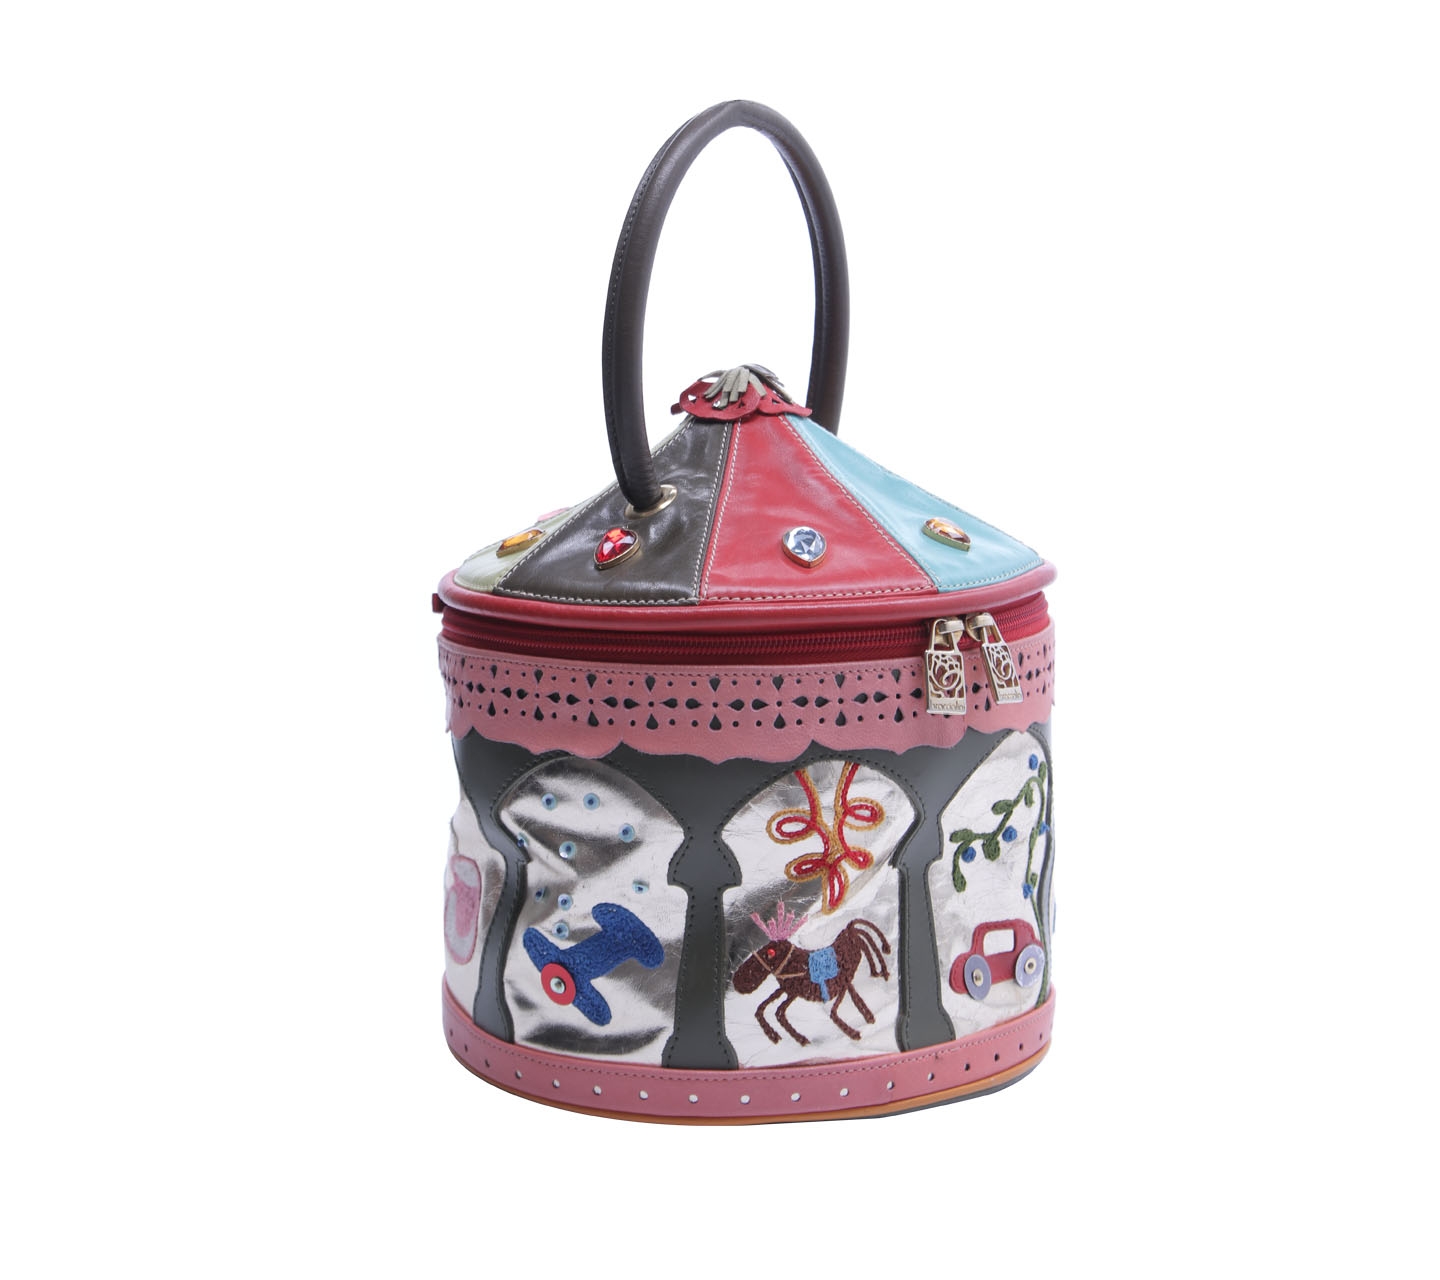 Braccialini Multicolor Circus Handbag